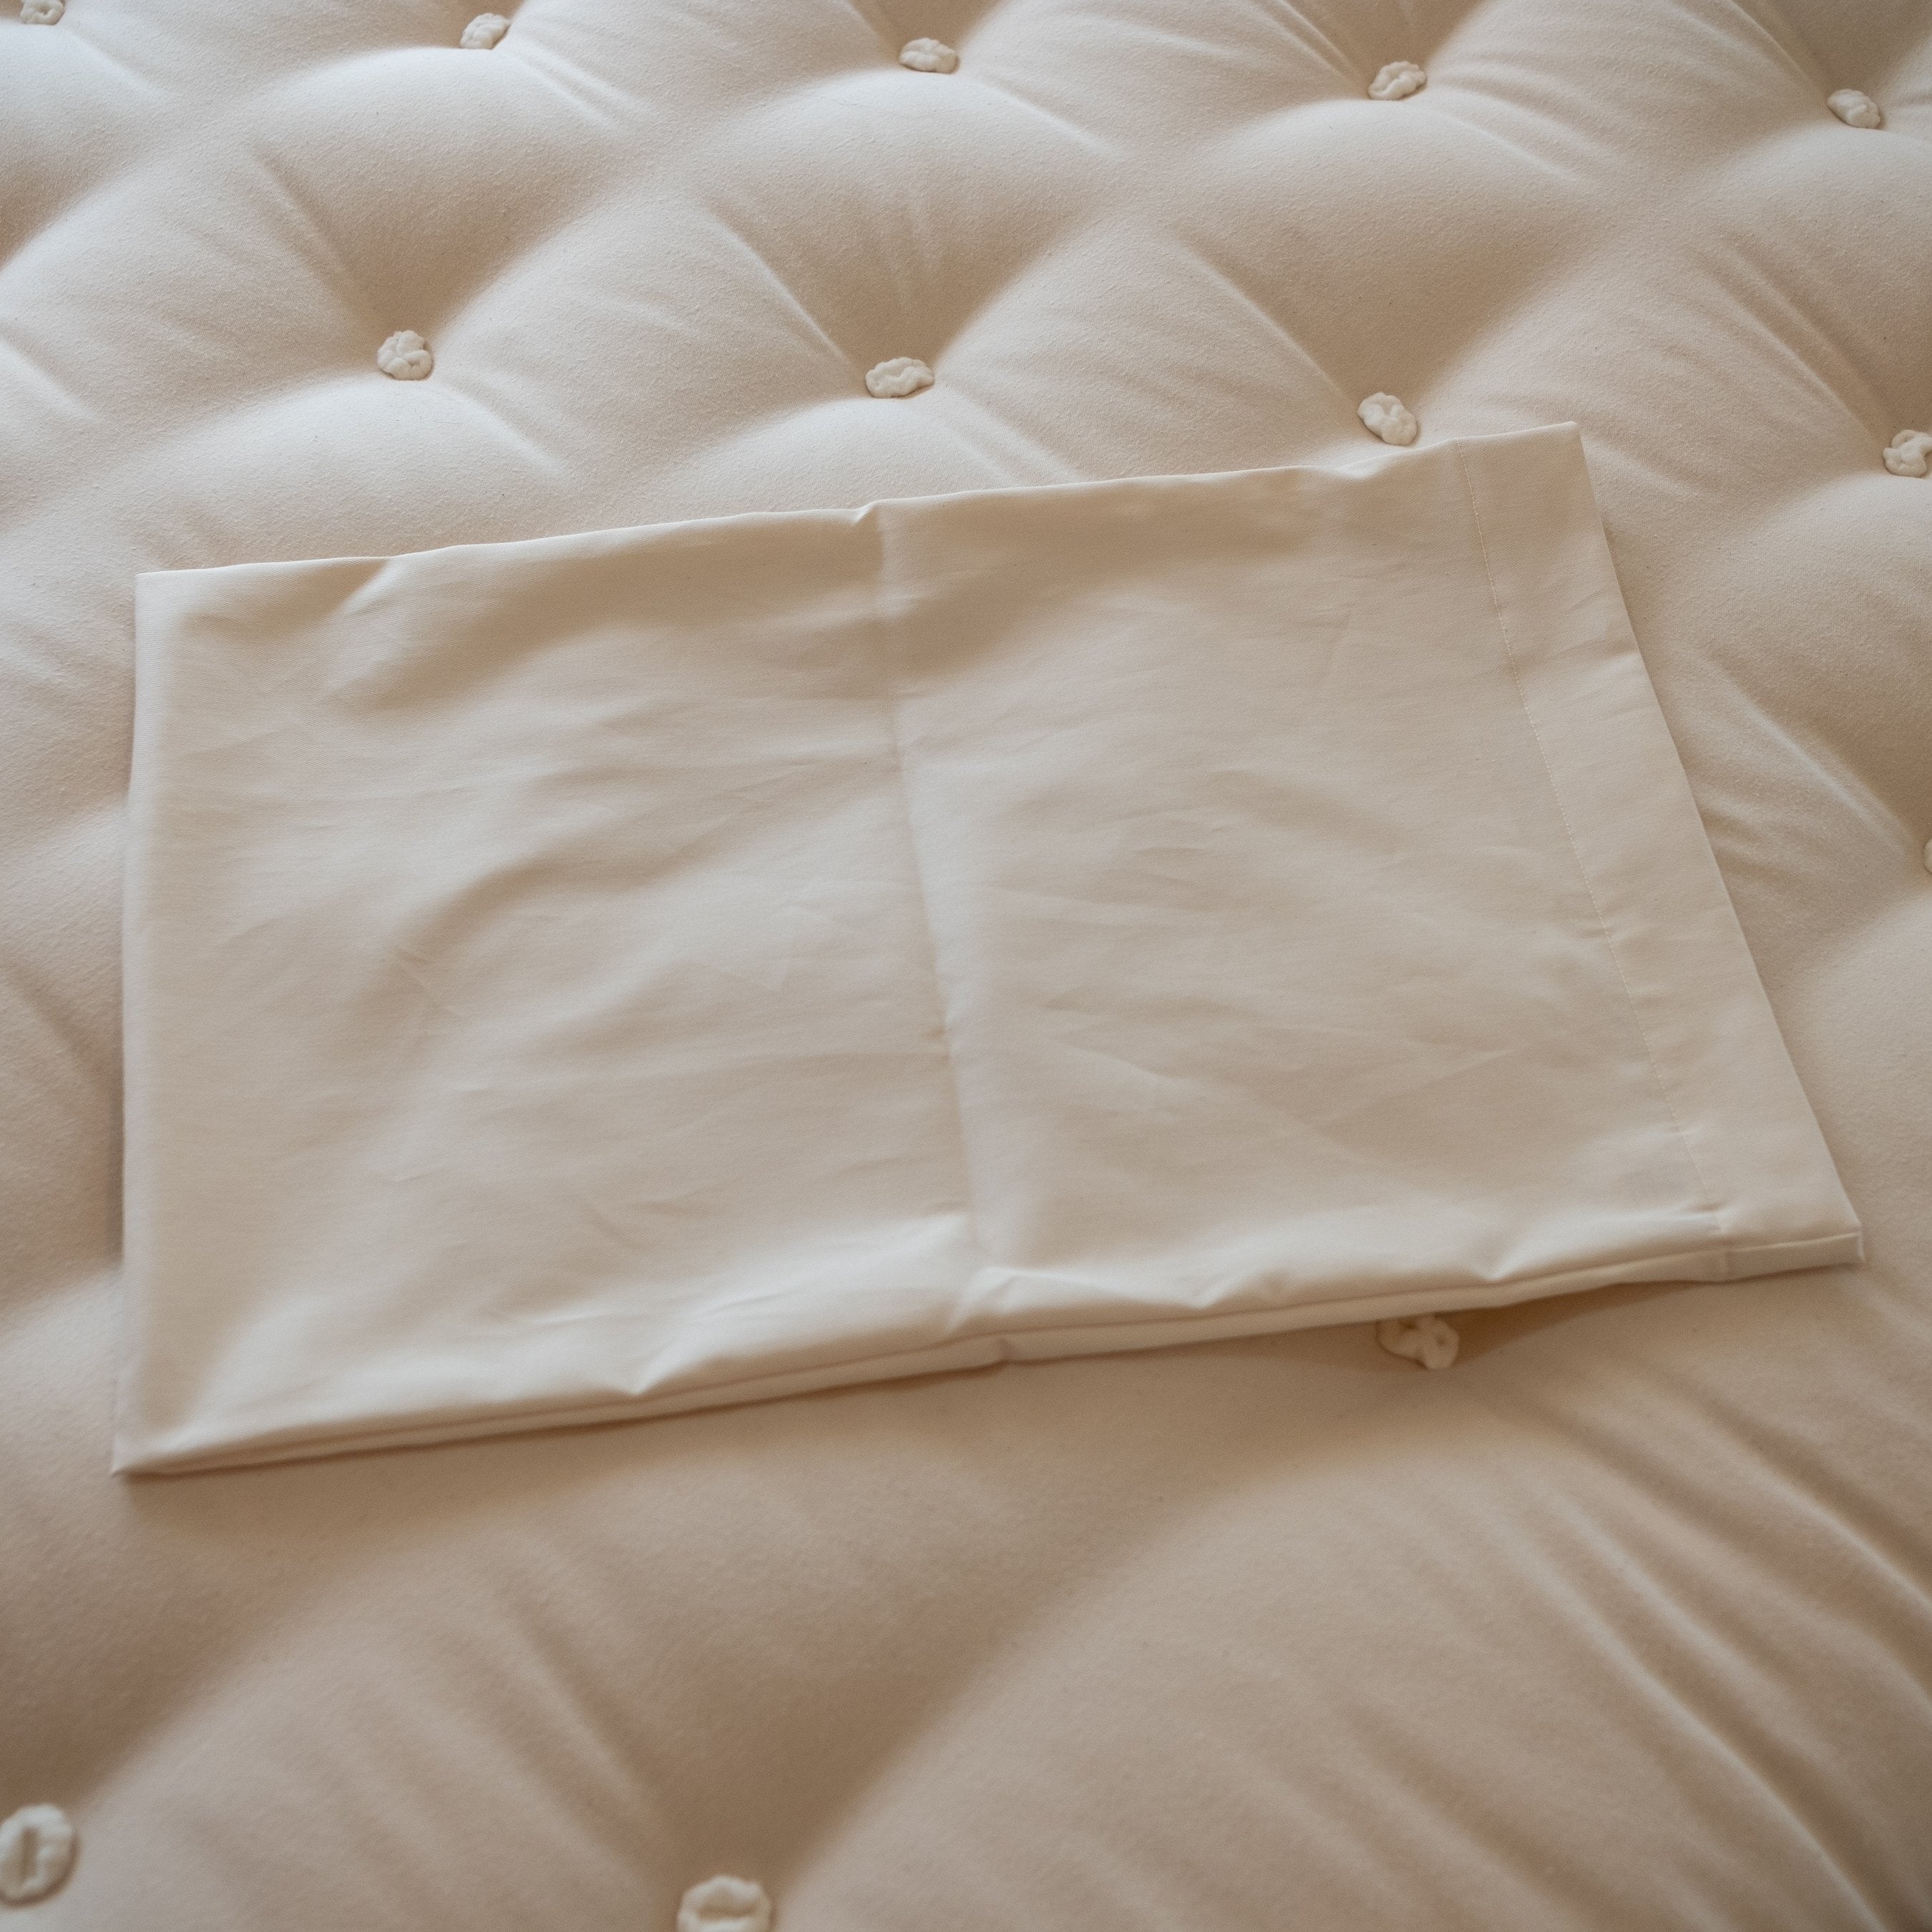 Rejuvenation Pillow: Natural Wool & Buckwheat